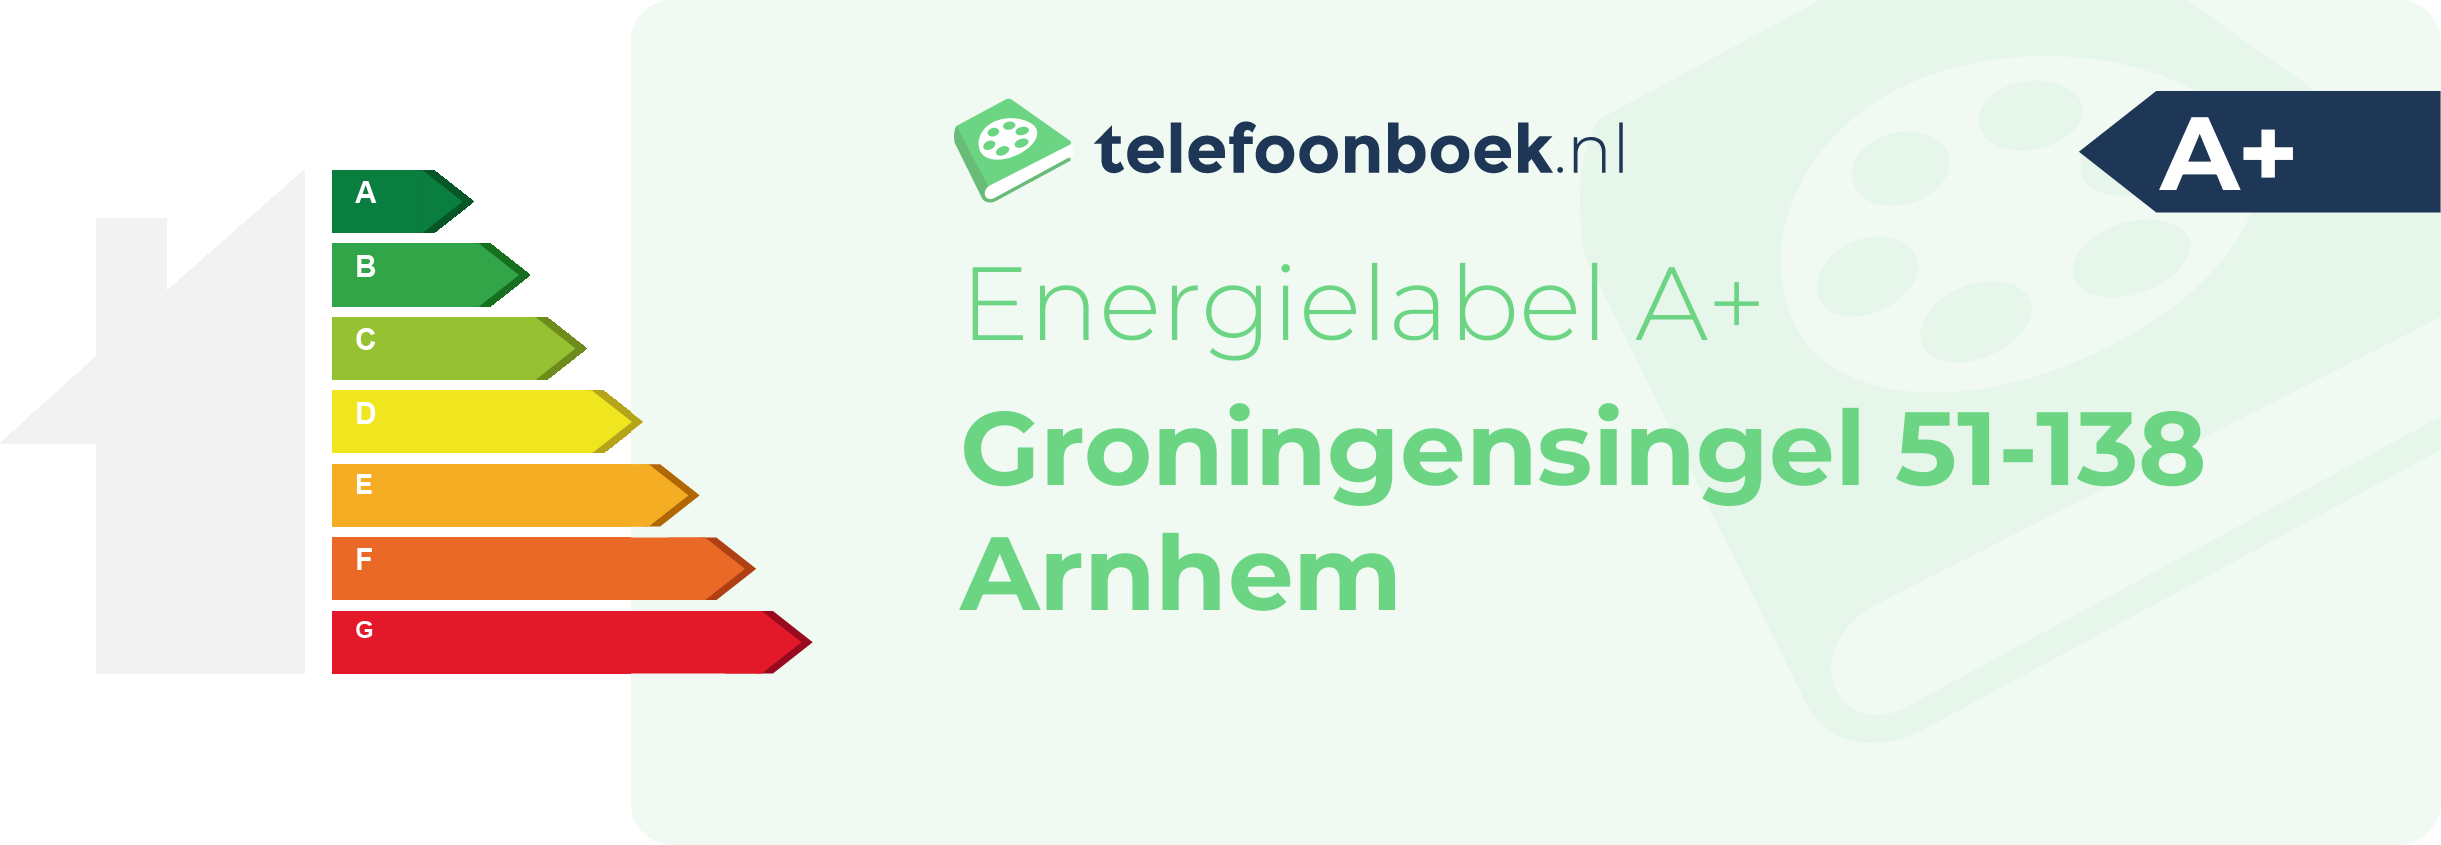 Energielabel Groningensingel 51-138 Arnhem